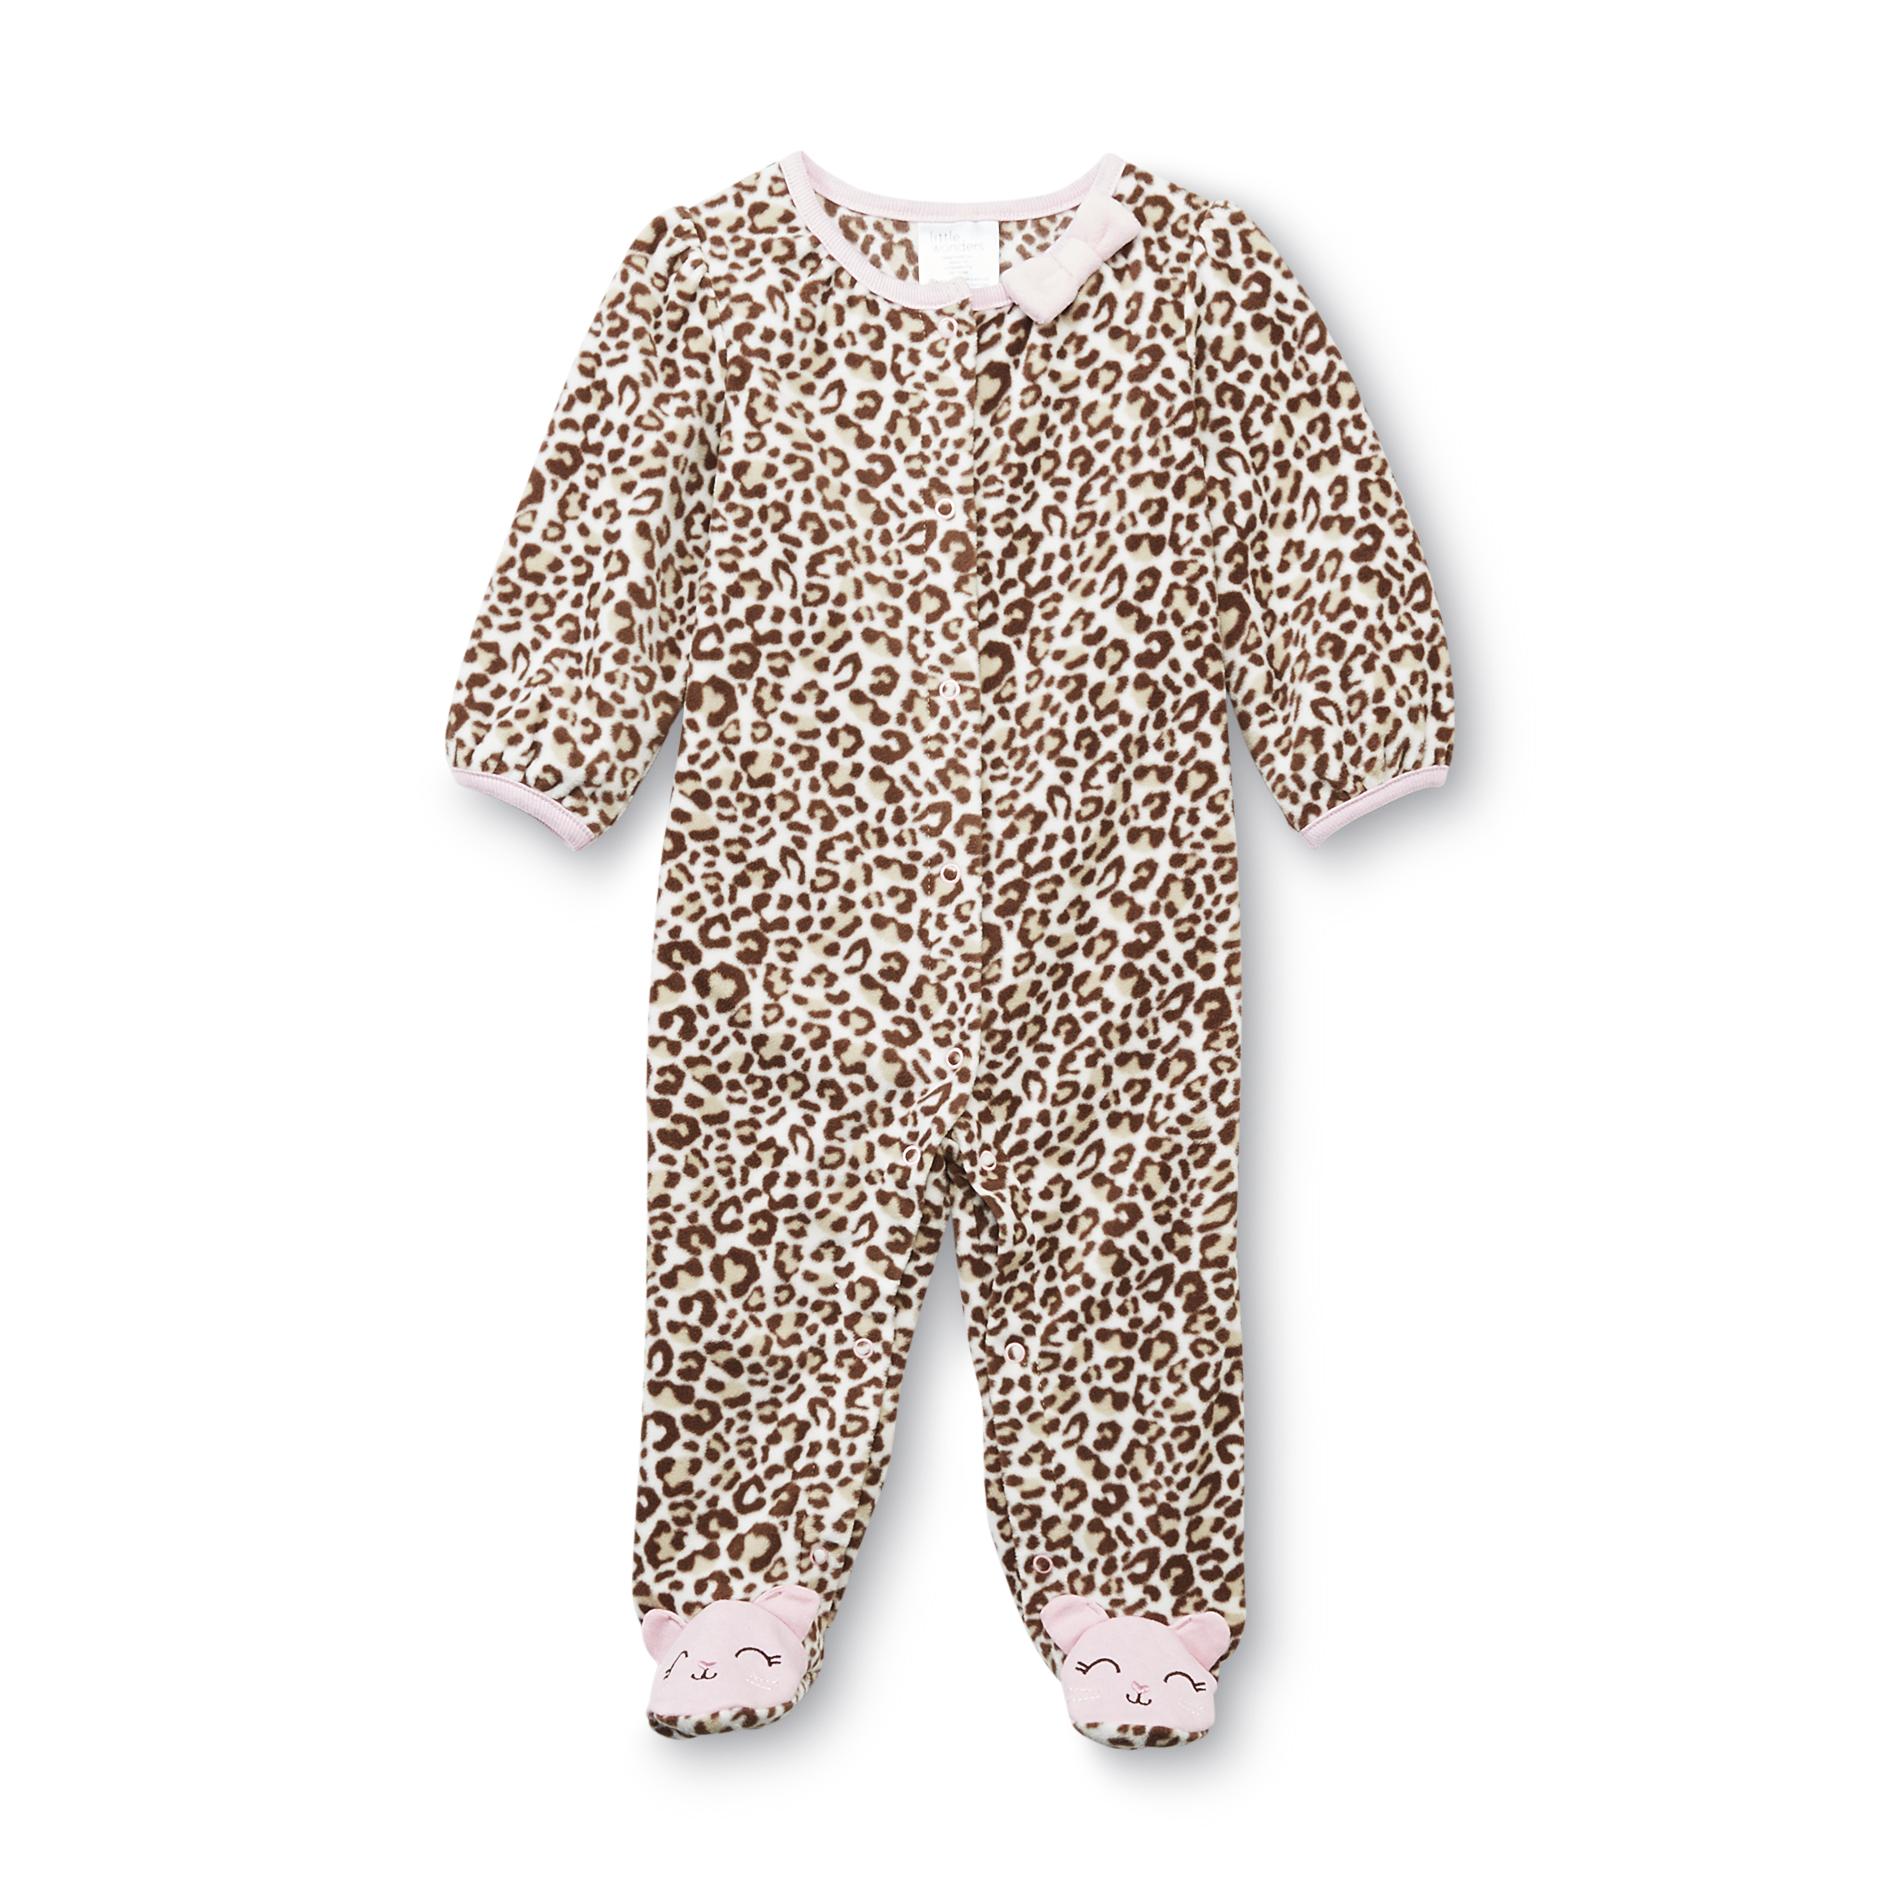 Little Wonders Newborn Girl's Fleece Sleeper Pajamas - Leopard Print